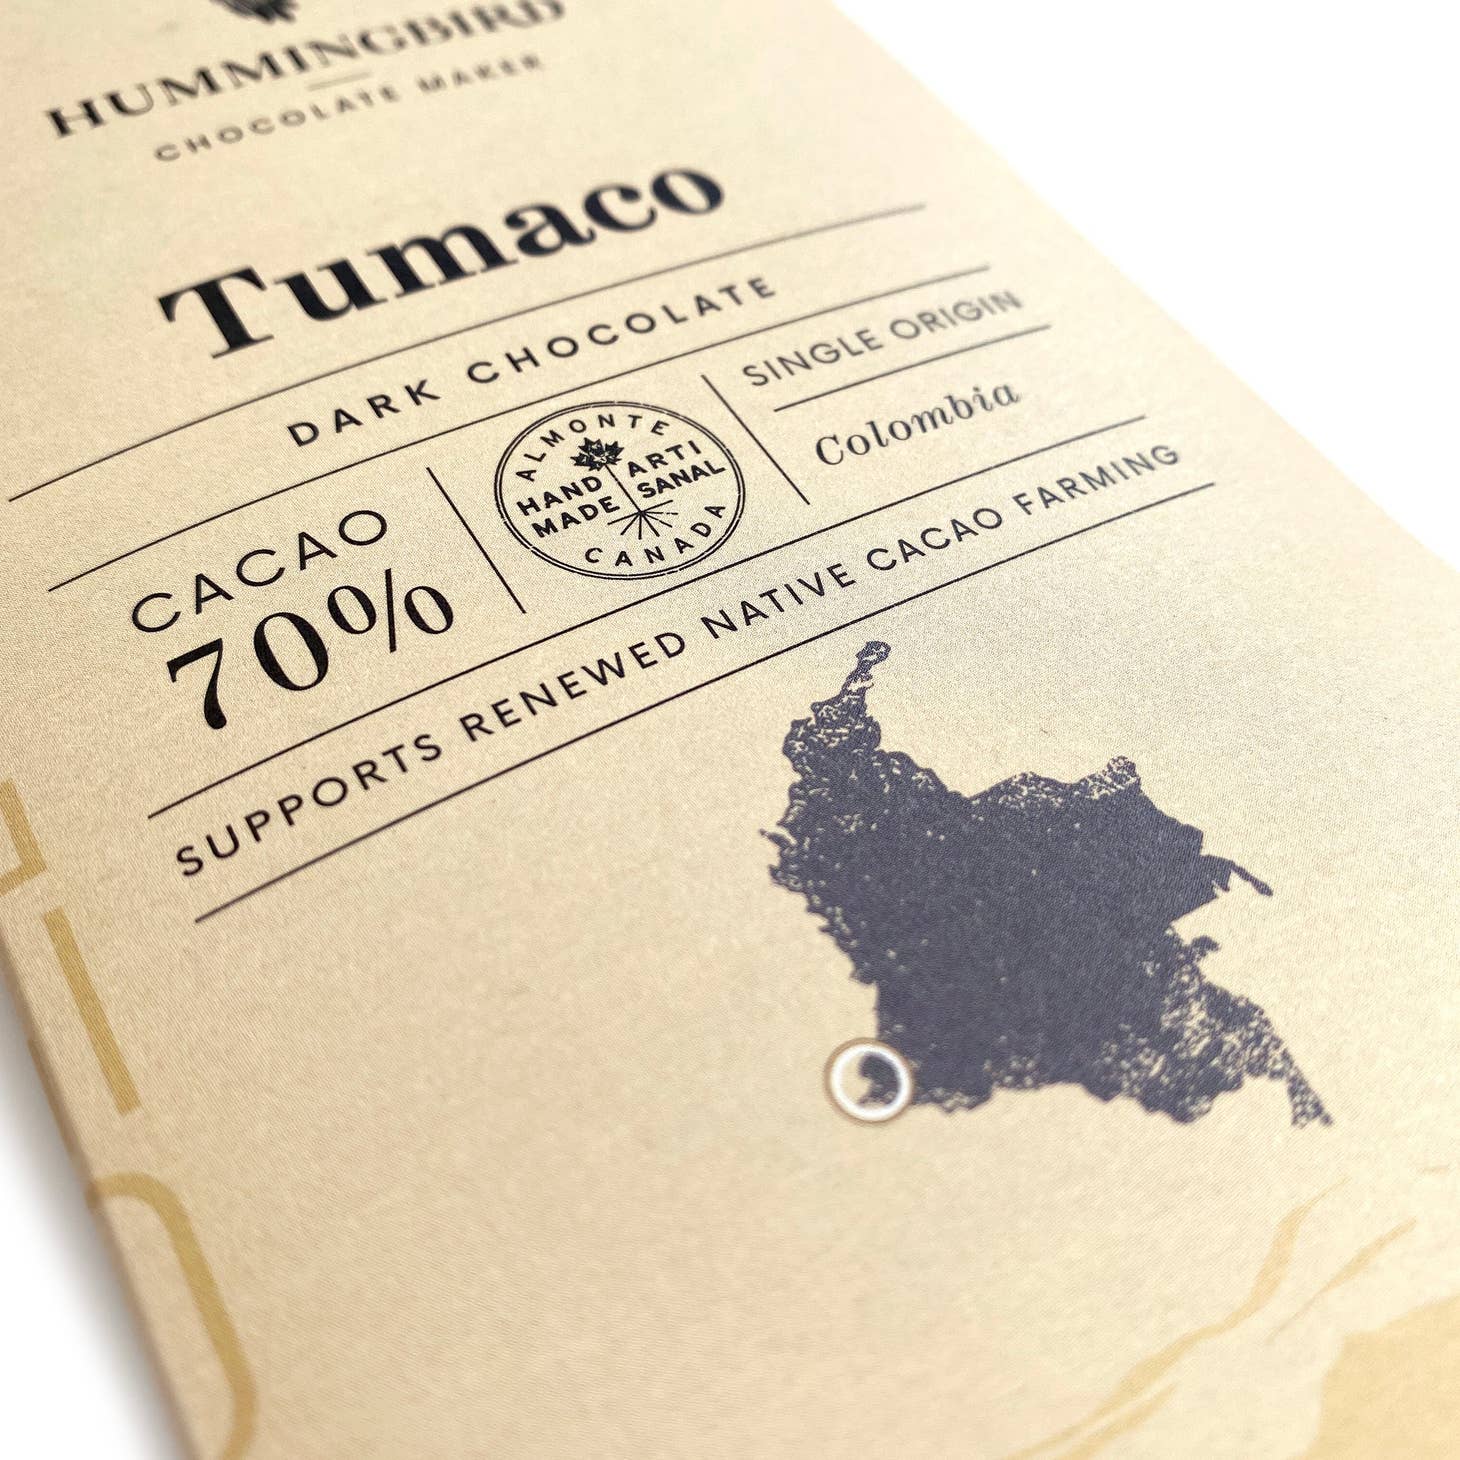 Tumaco 70% Dark Chocolate by Hummingbird